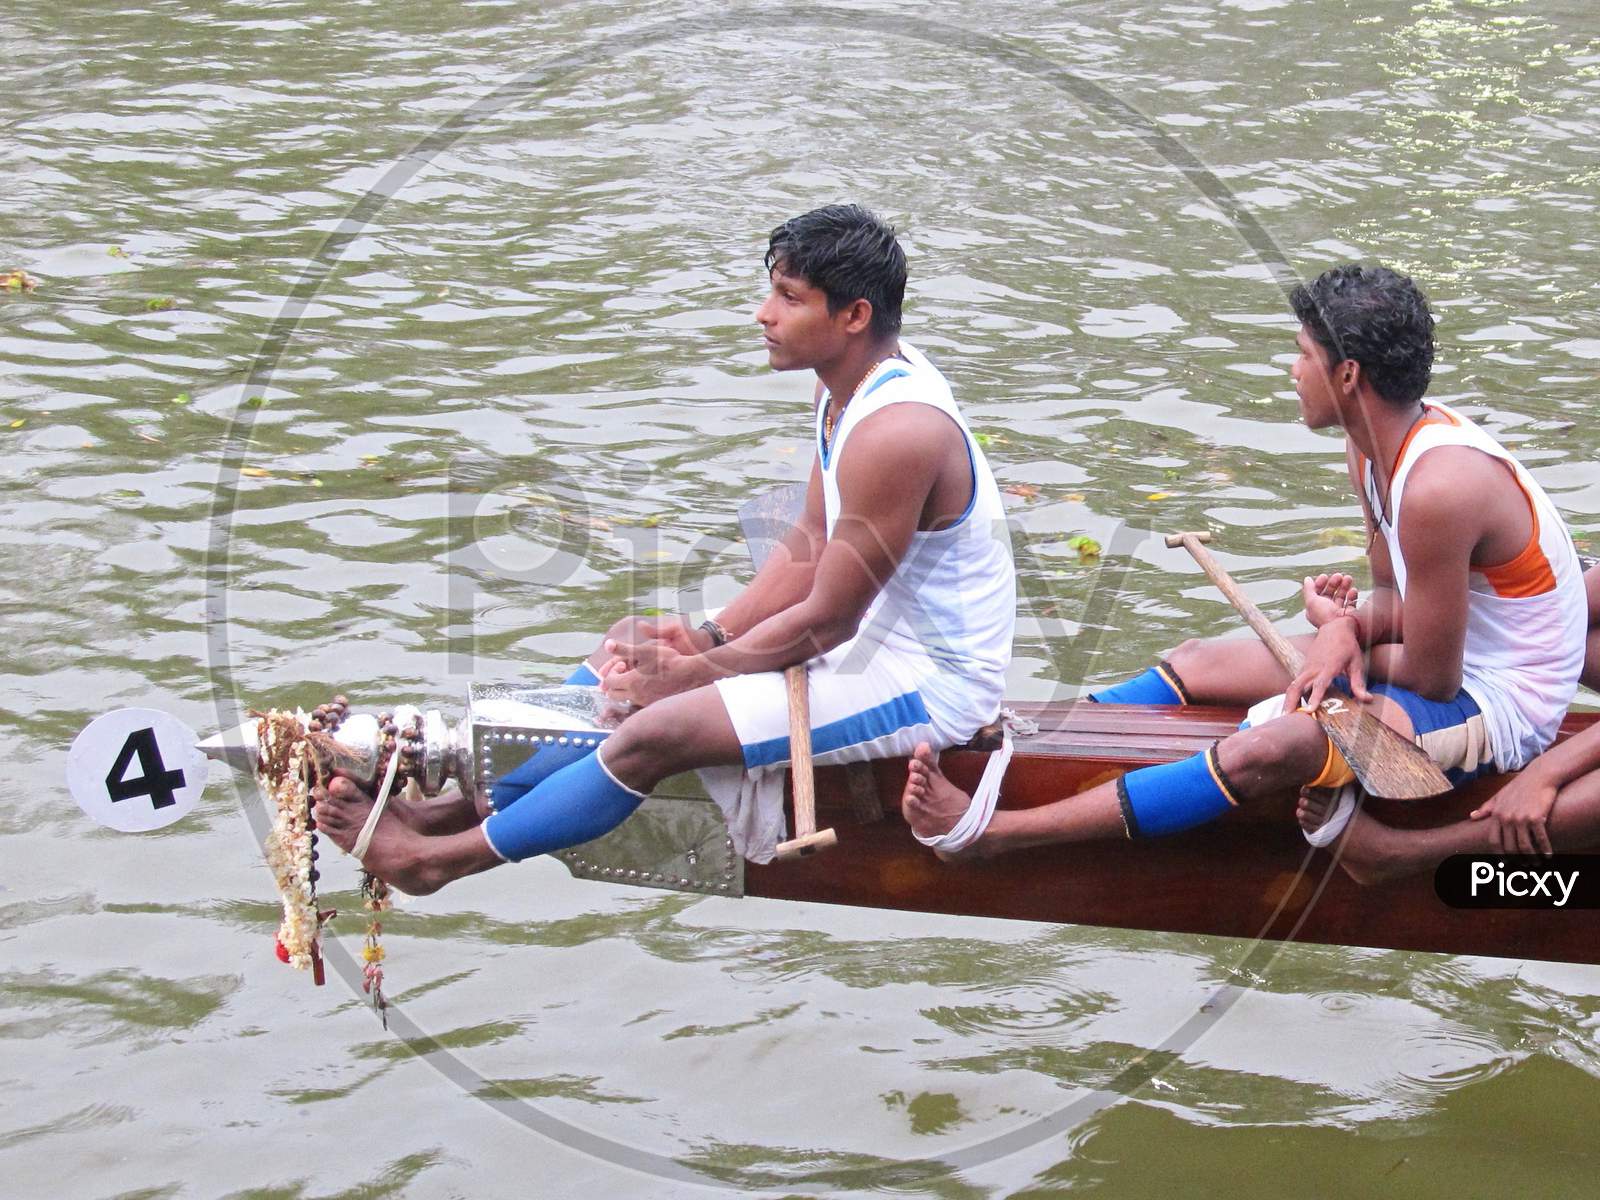 Front end of the Snake boat (Chundan vallom) of Kerala state, India.